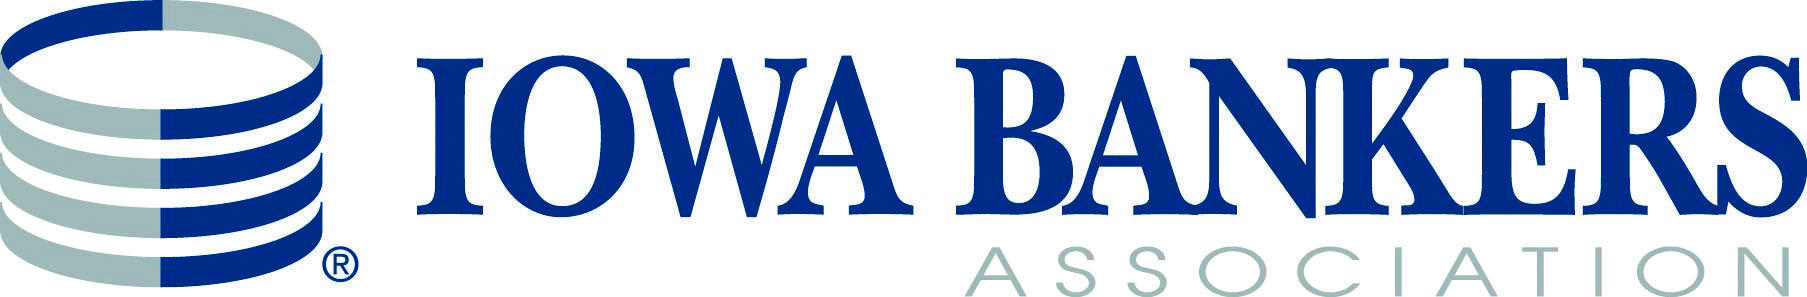 Iowa-Bankers-Association